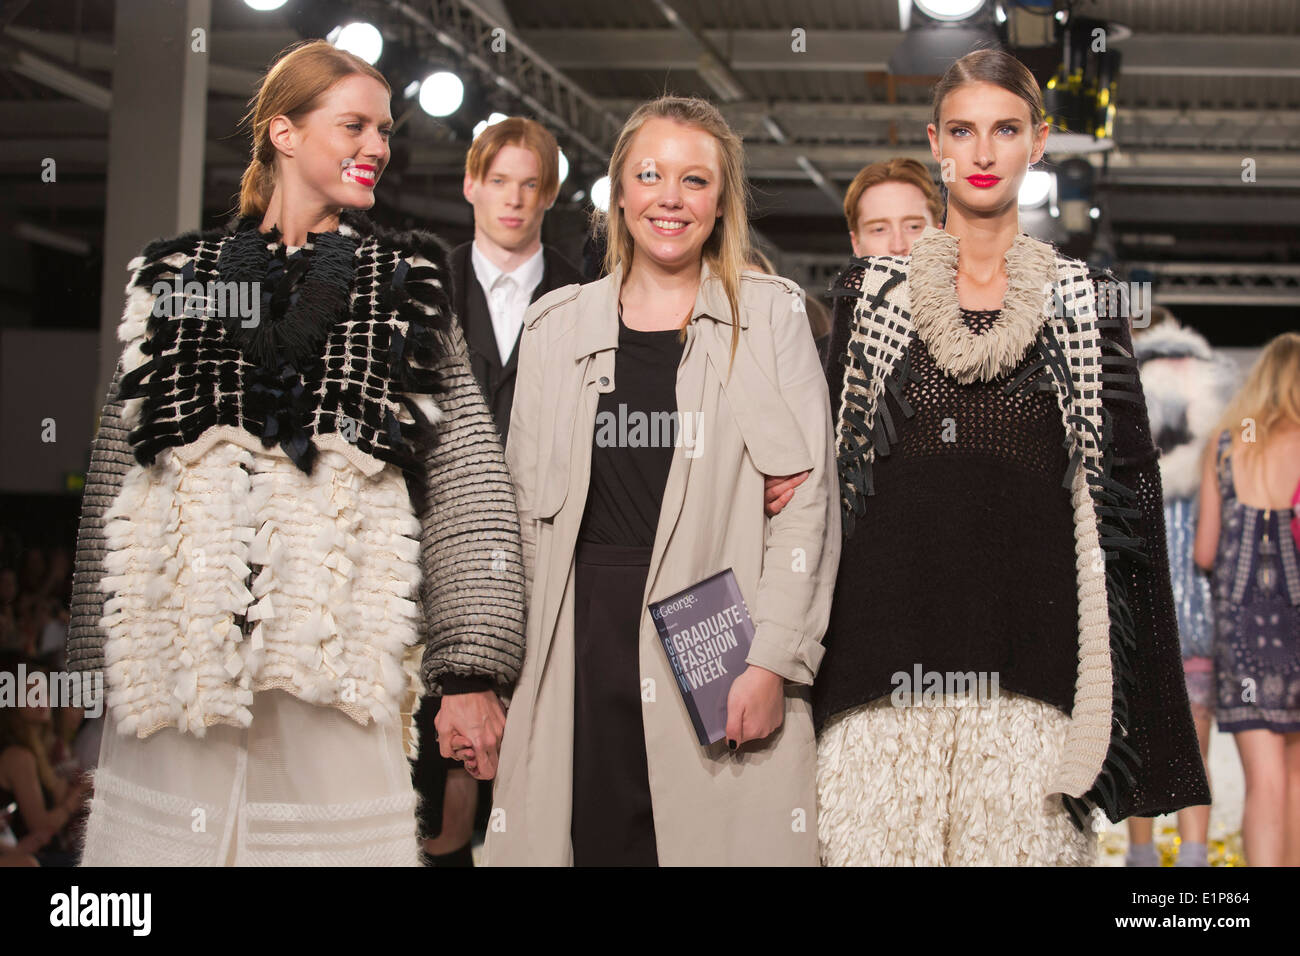 Rebecca Swann, Stuart Peters Knitwear Award, Graduate Fashion Week 2014 Awards Show Stock Photo